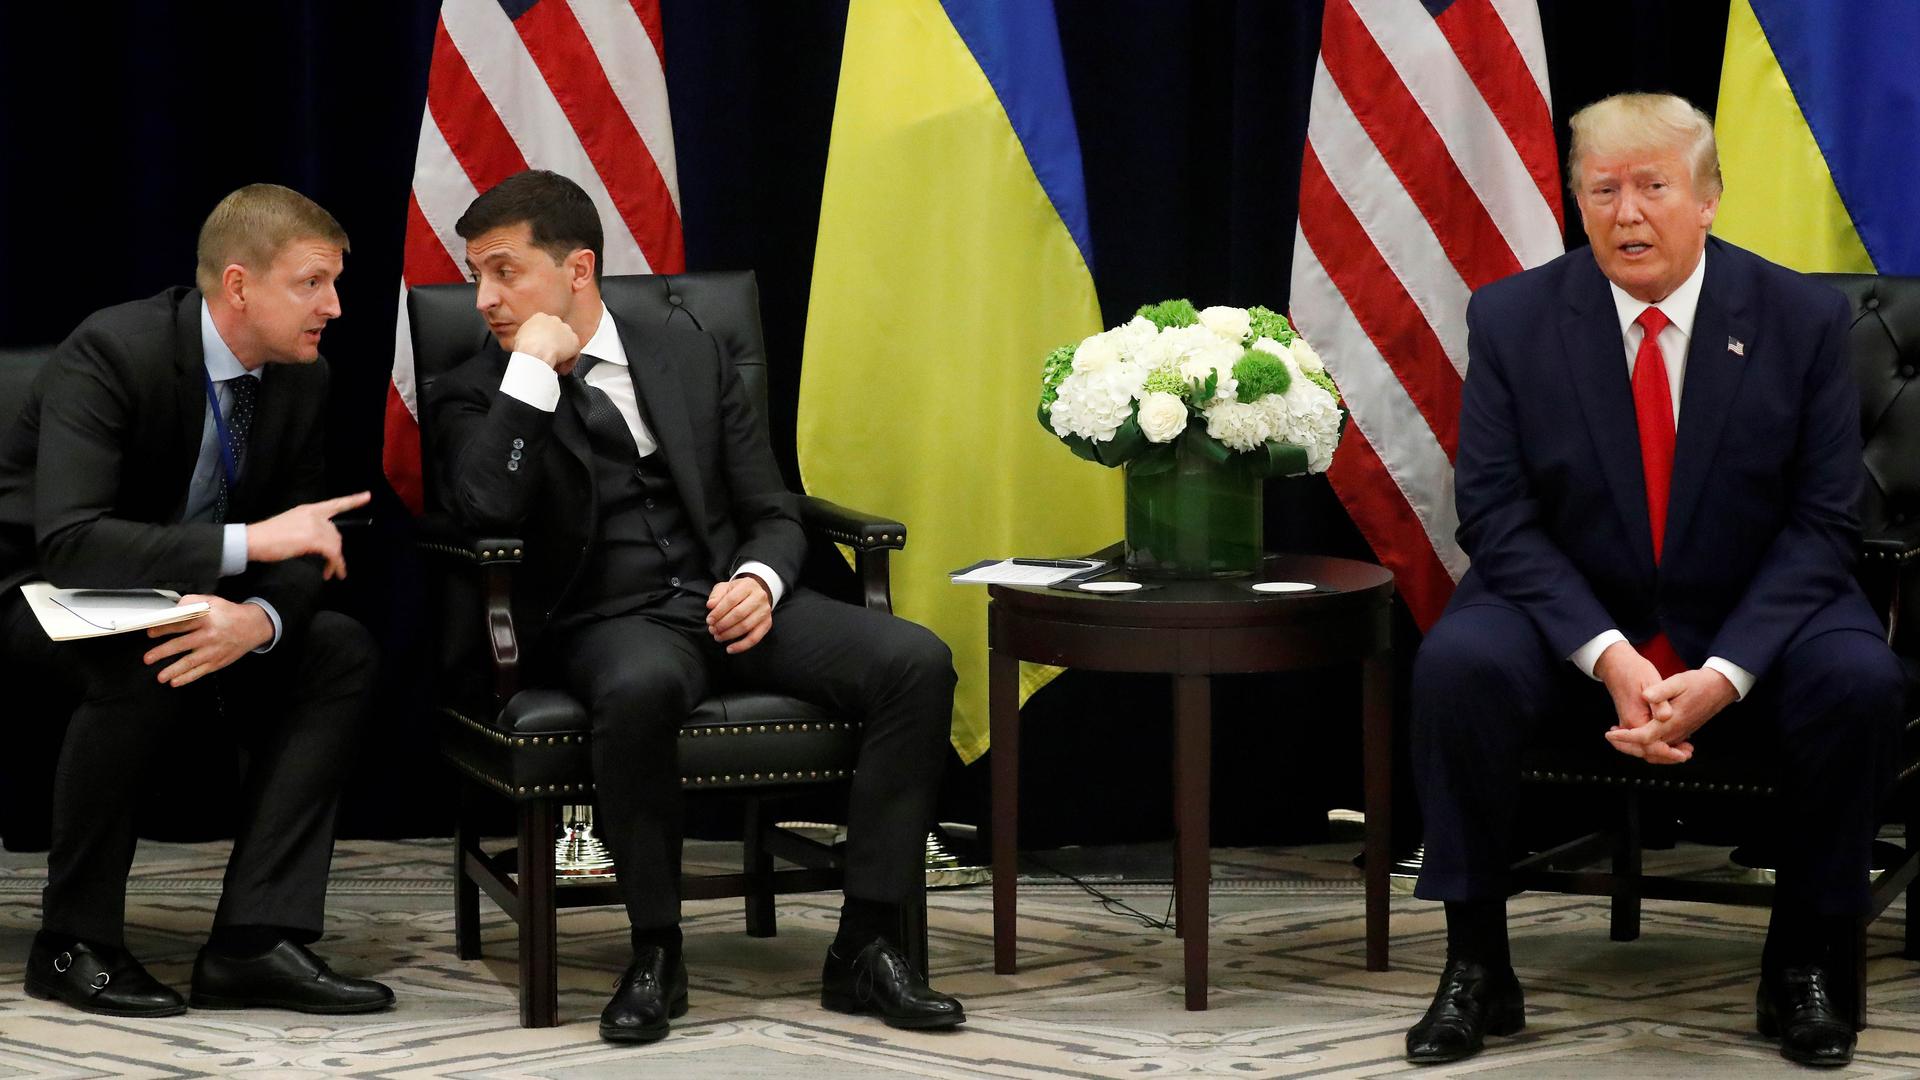 Ukraine's President Volodymyr Zelenskiy listens to a translator as he and US President Donald Trump hold a bilateral meeting